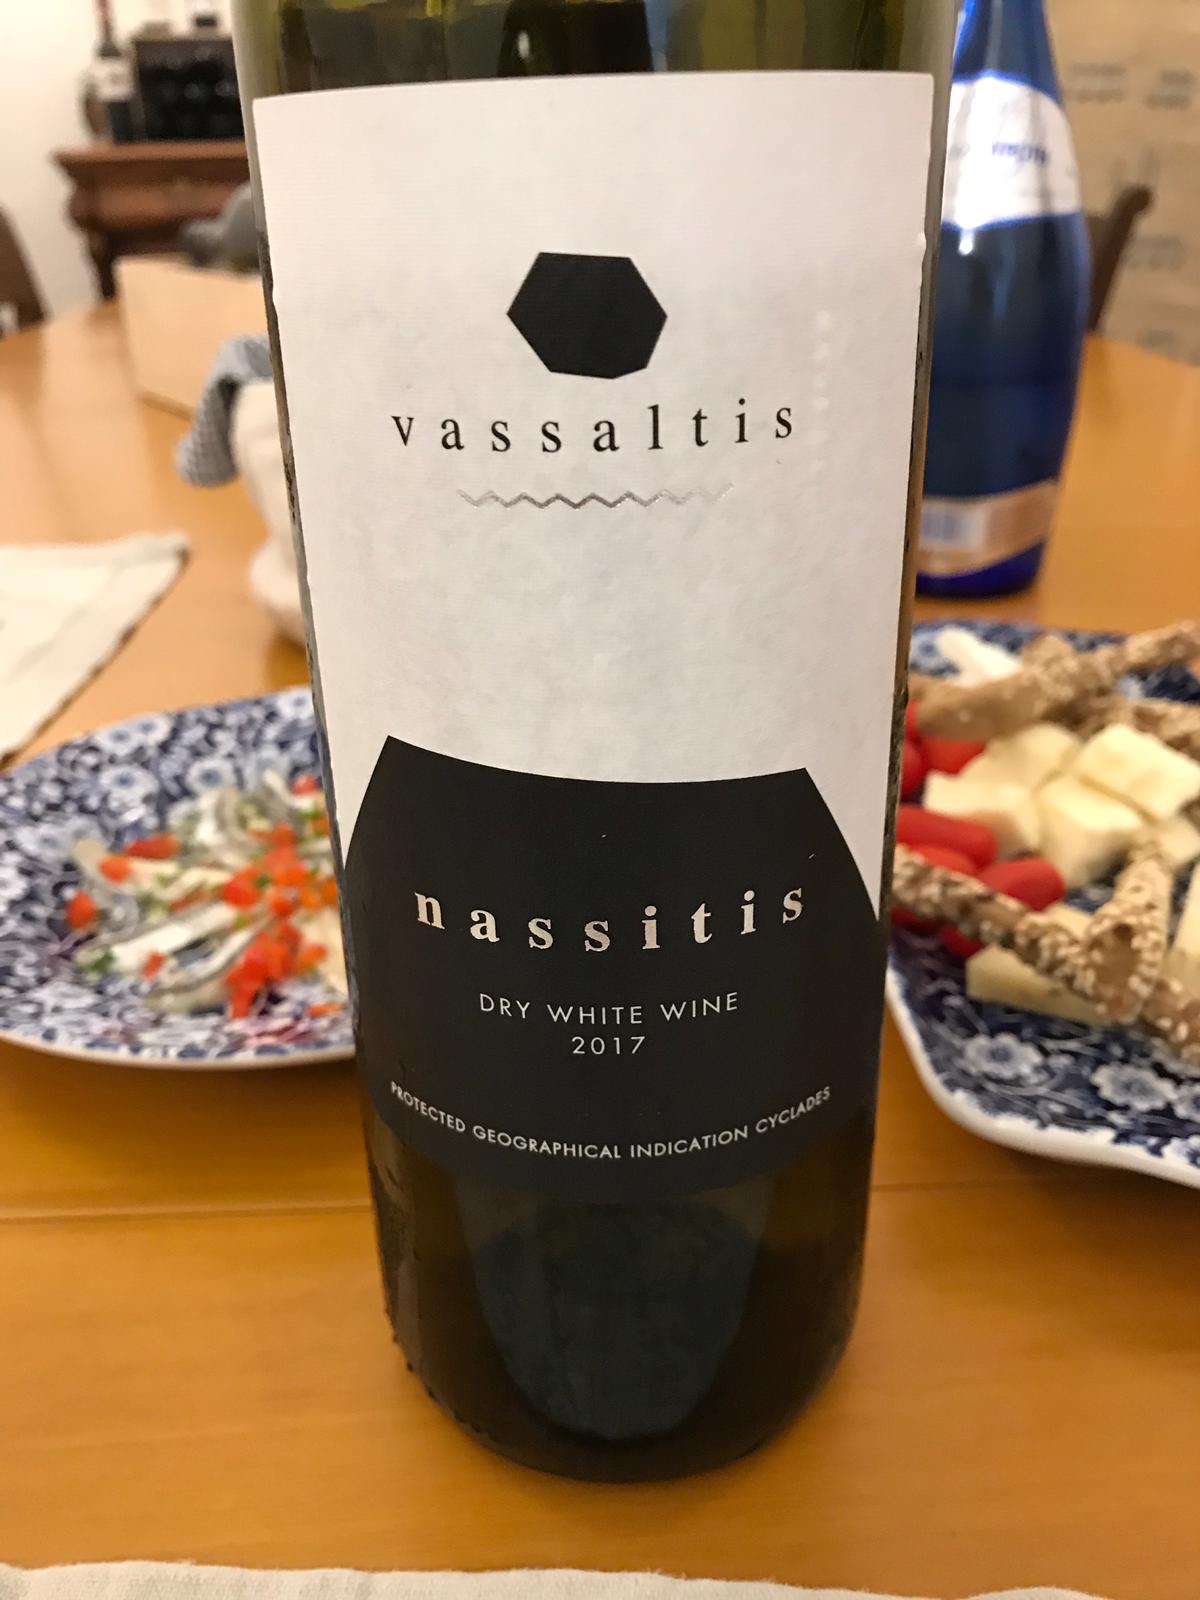 Vassaltis vineyard's Nassitis - dry, white wine (2017)